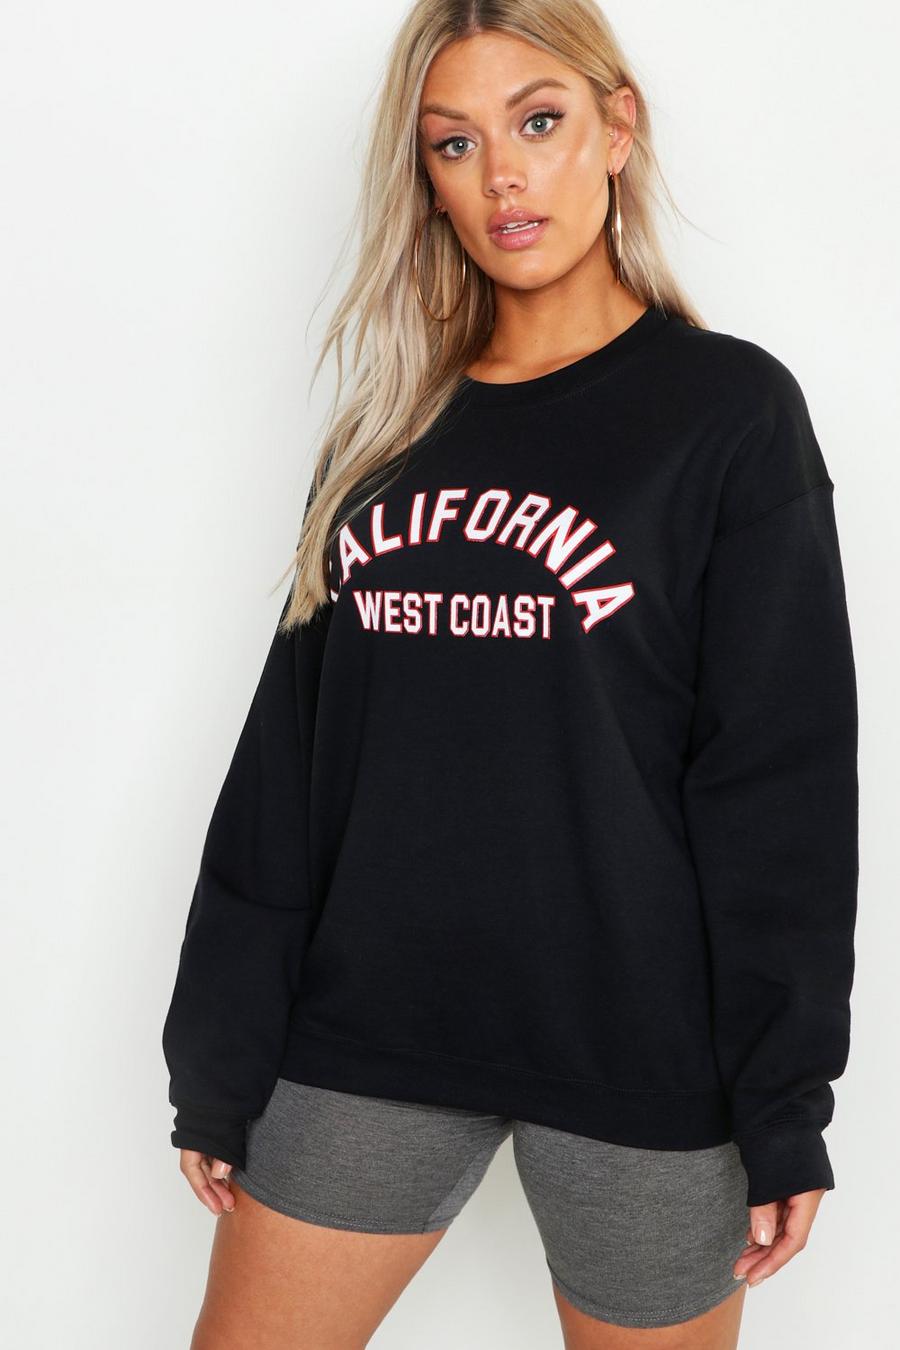 Plus - "California West Coast" Sweatshirt image number 1